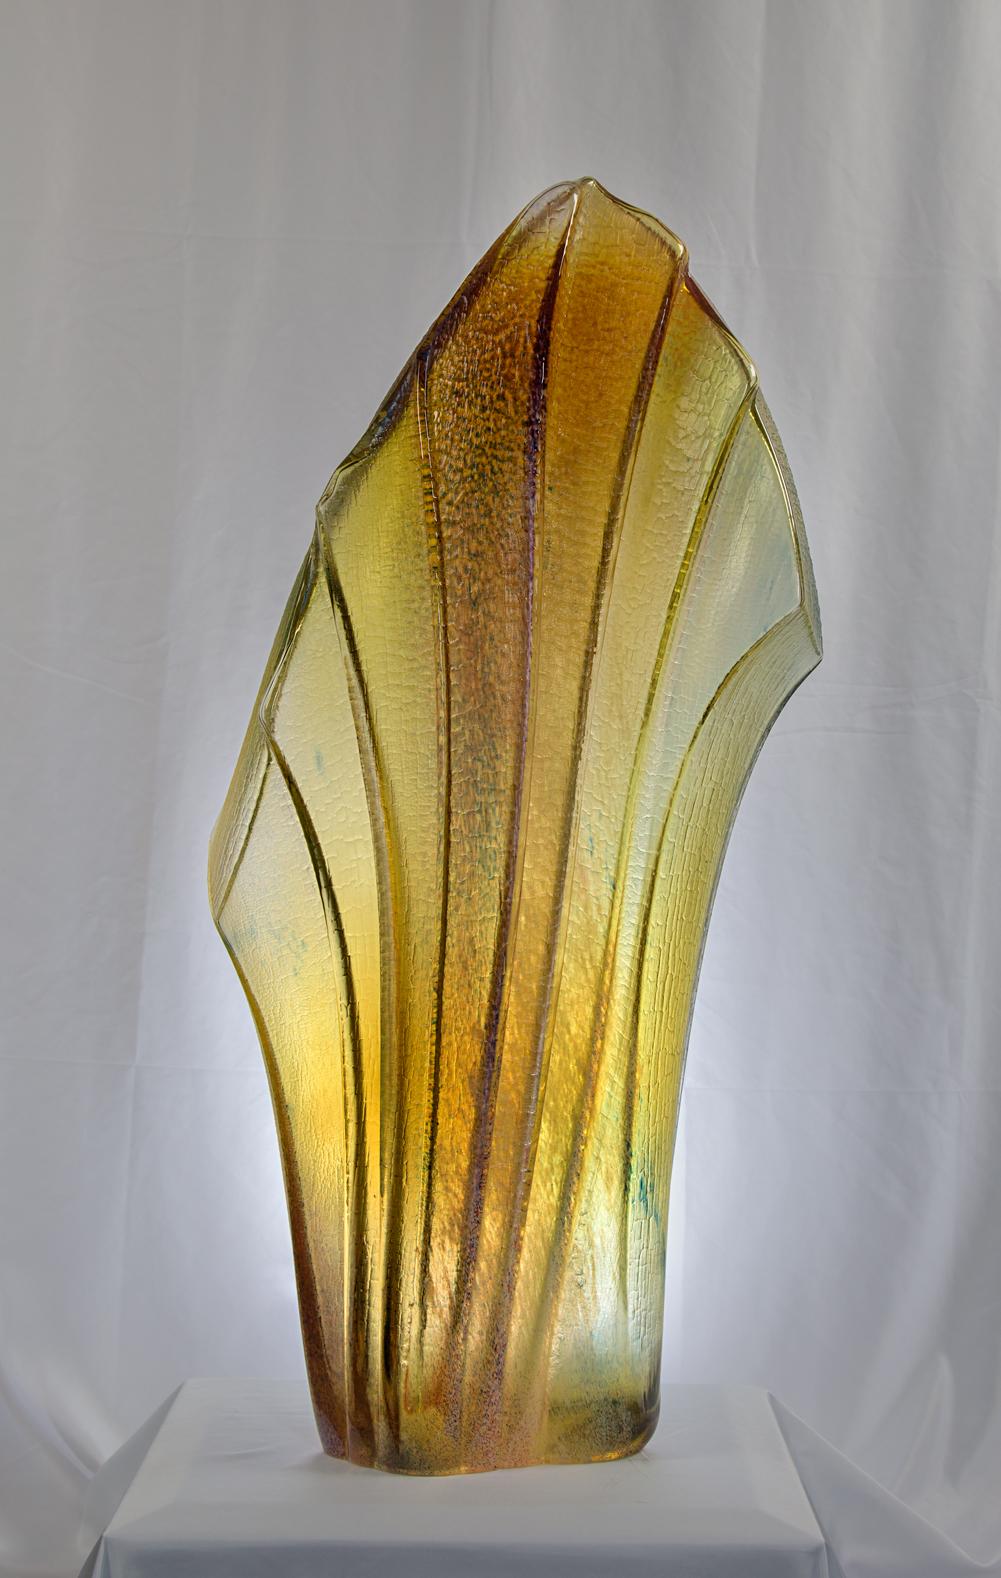 William Morris Figurative Sculpture - Standing Stone.  Contemporary blow glass art